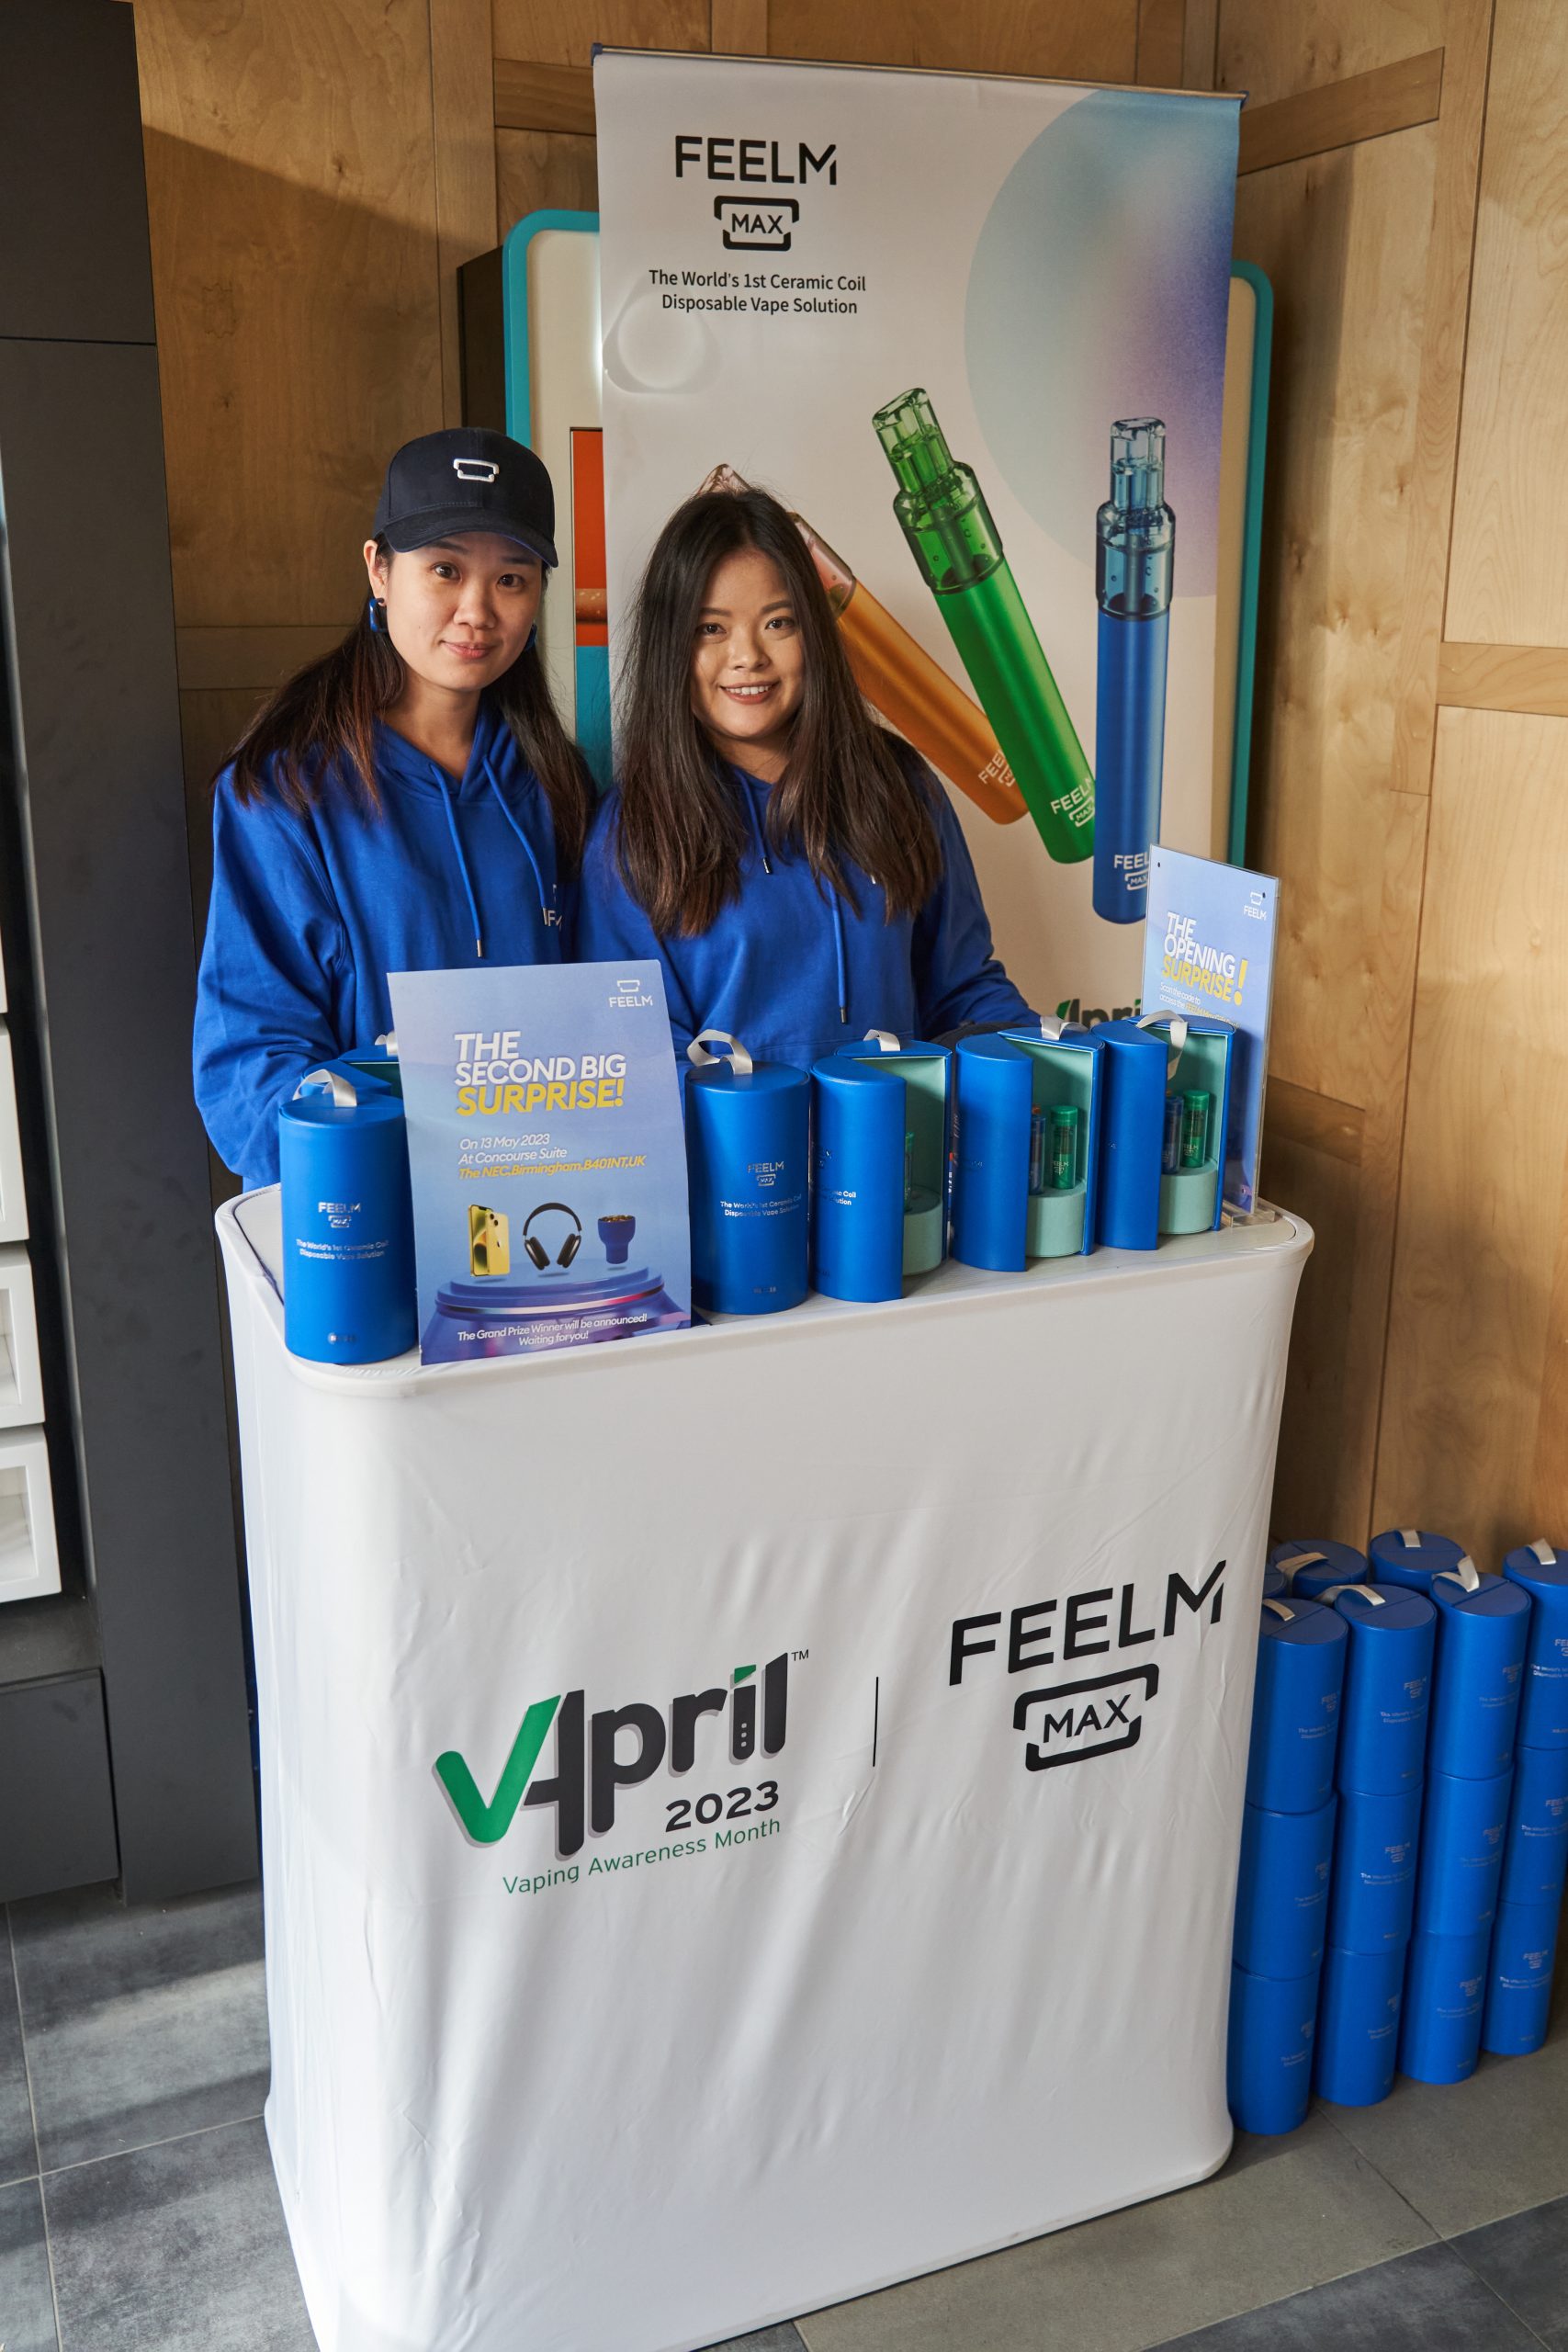 Vape brand Feelm holds VApril giveaways